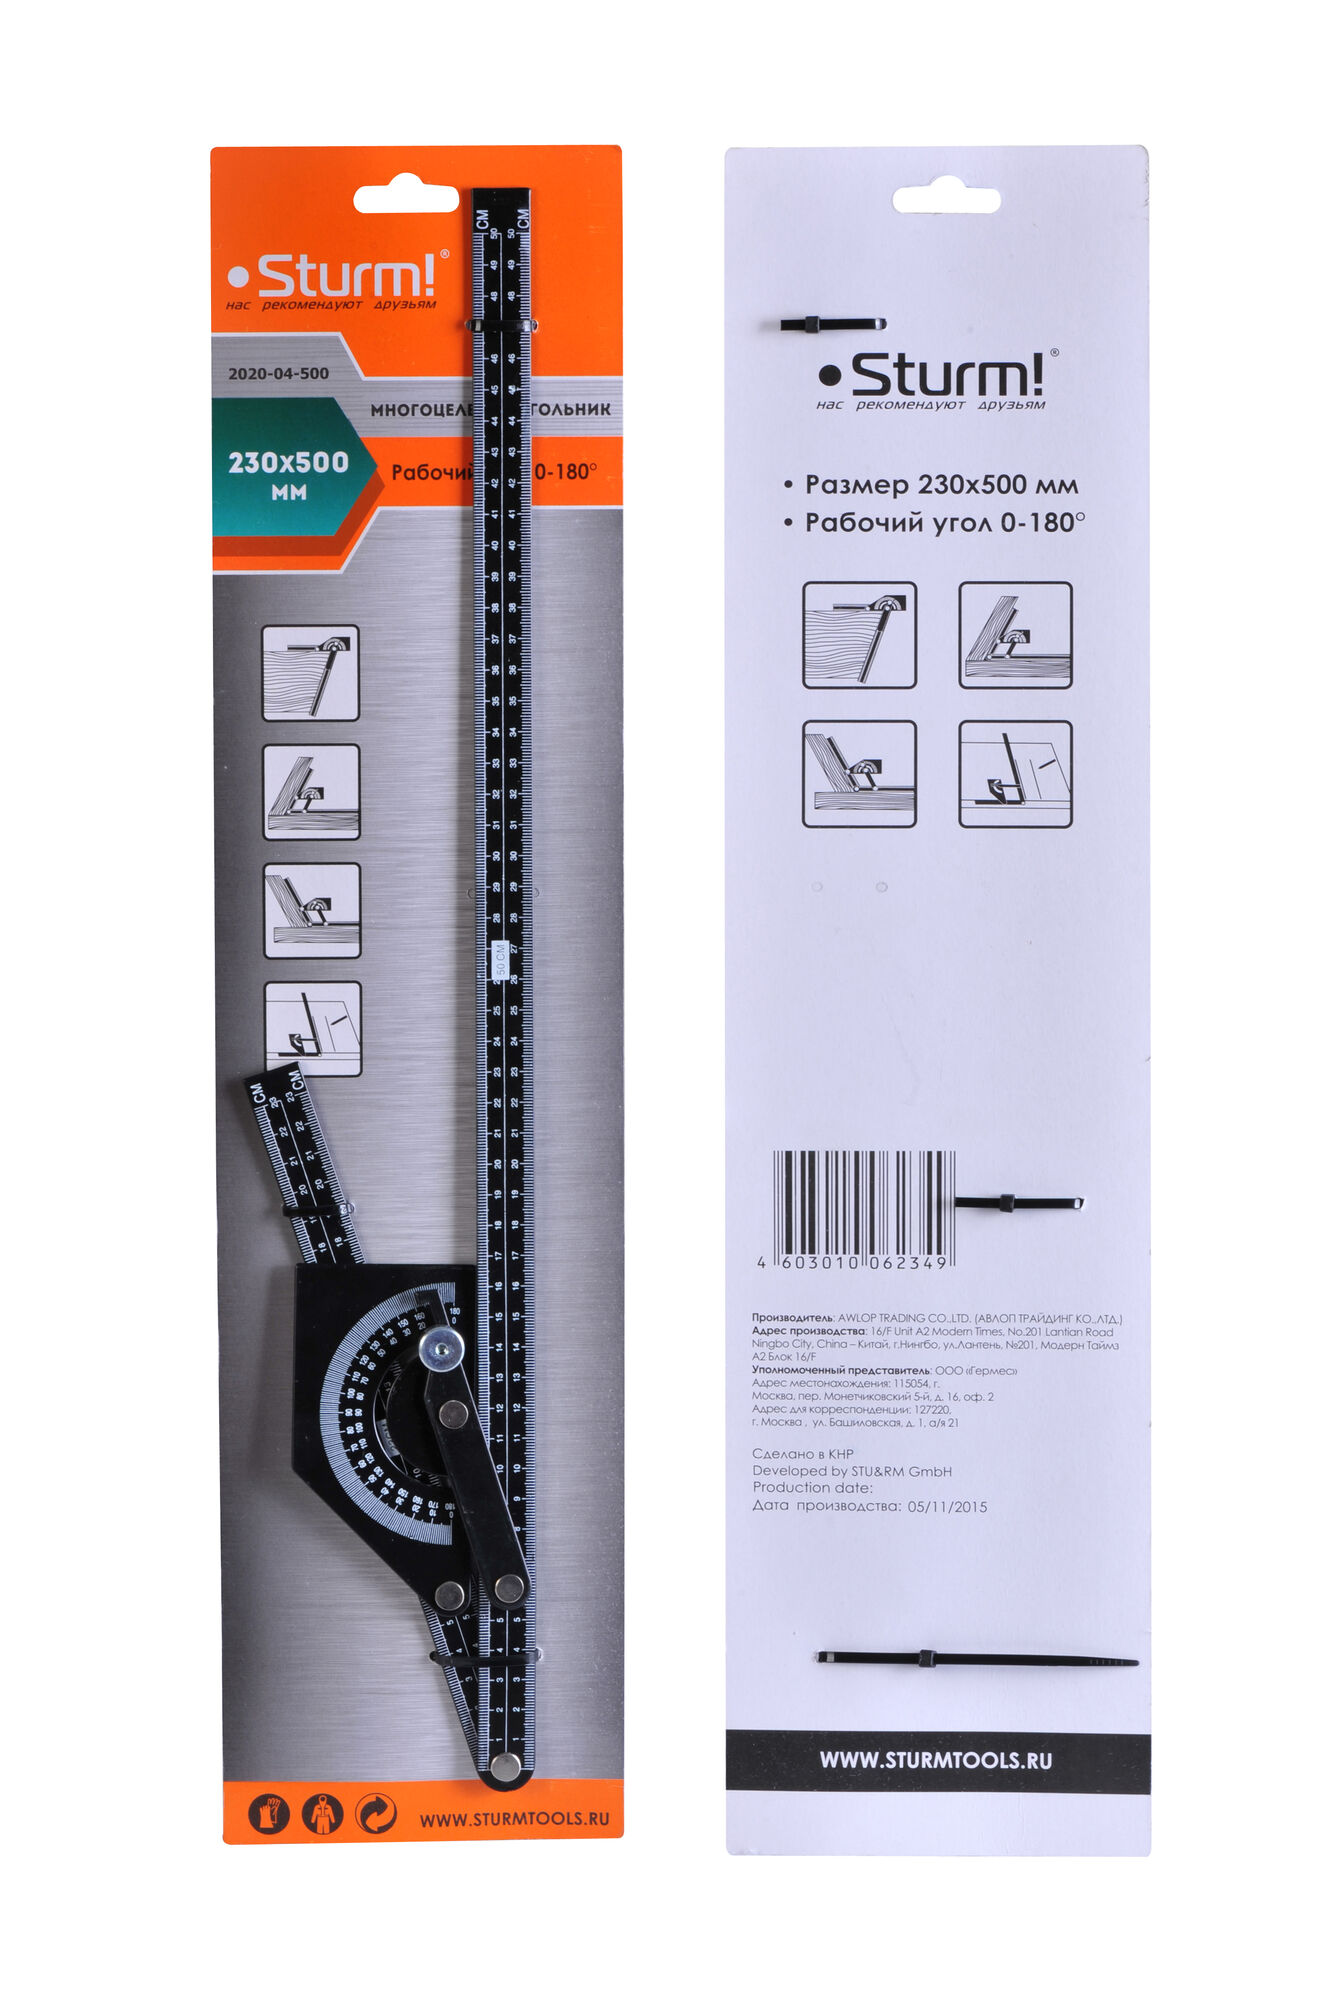 Угольник Sturm 2020-04-500 Sturm!